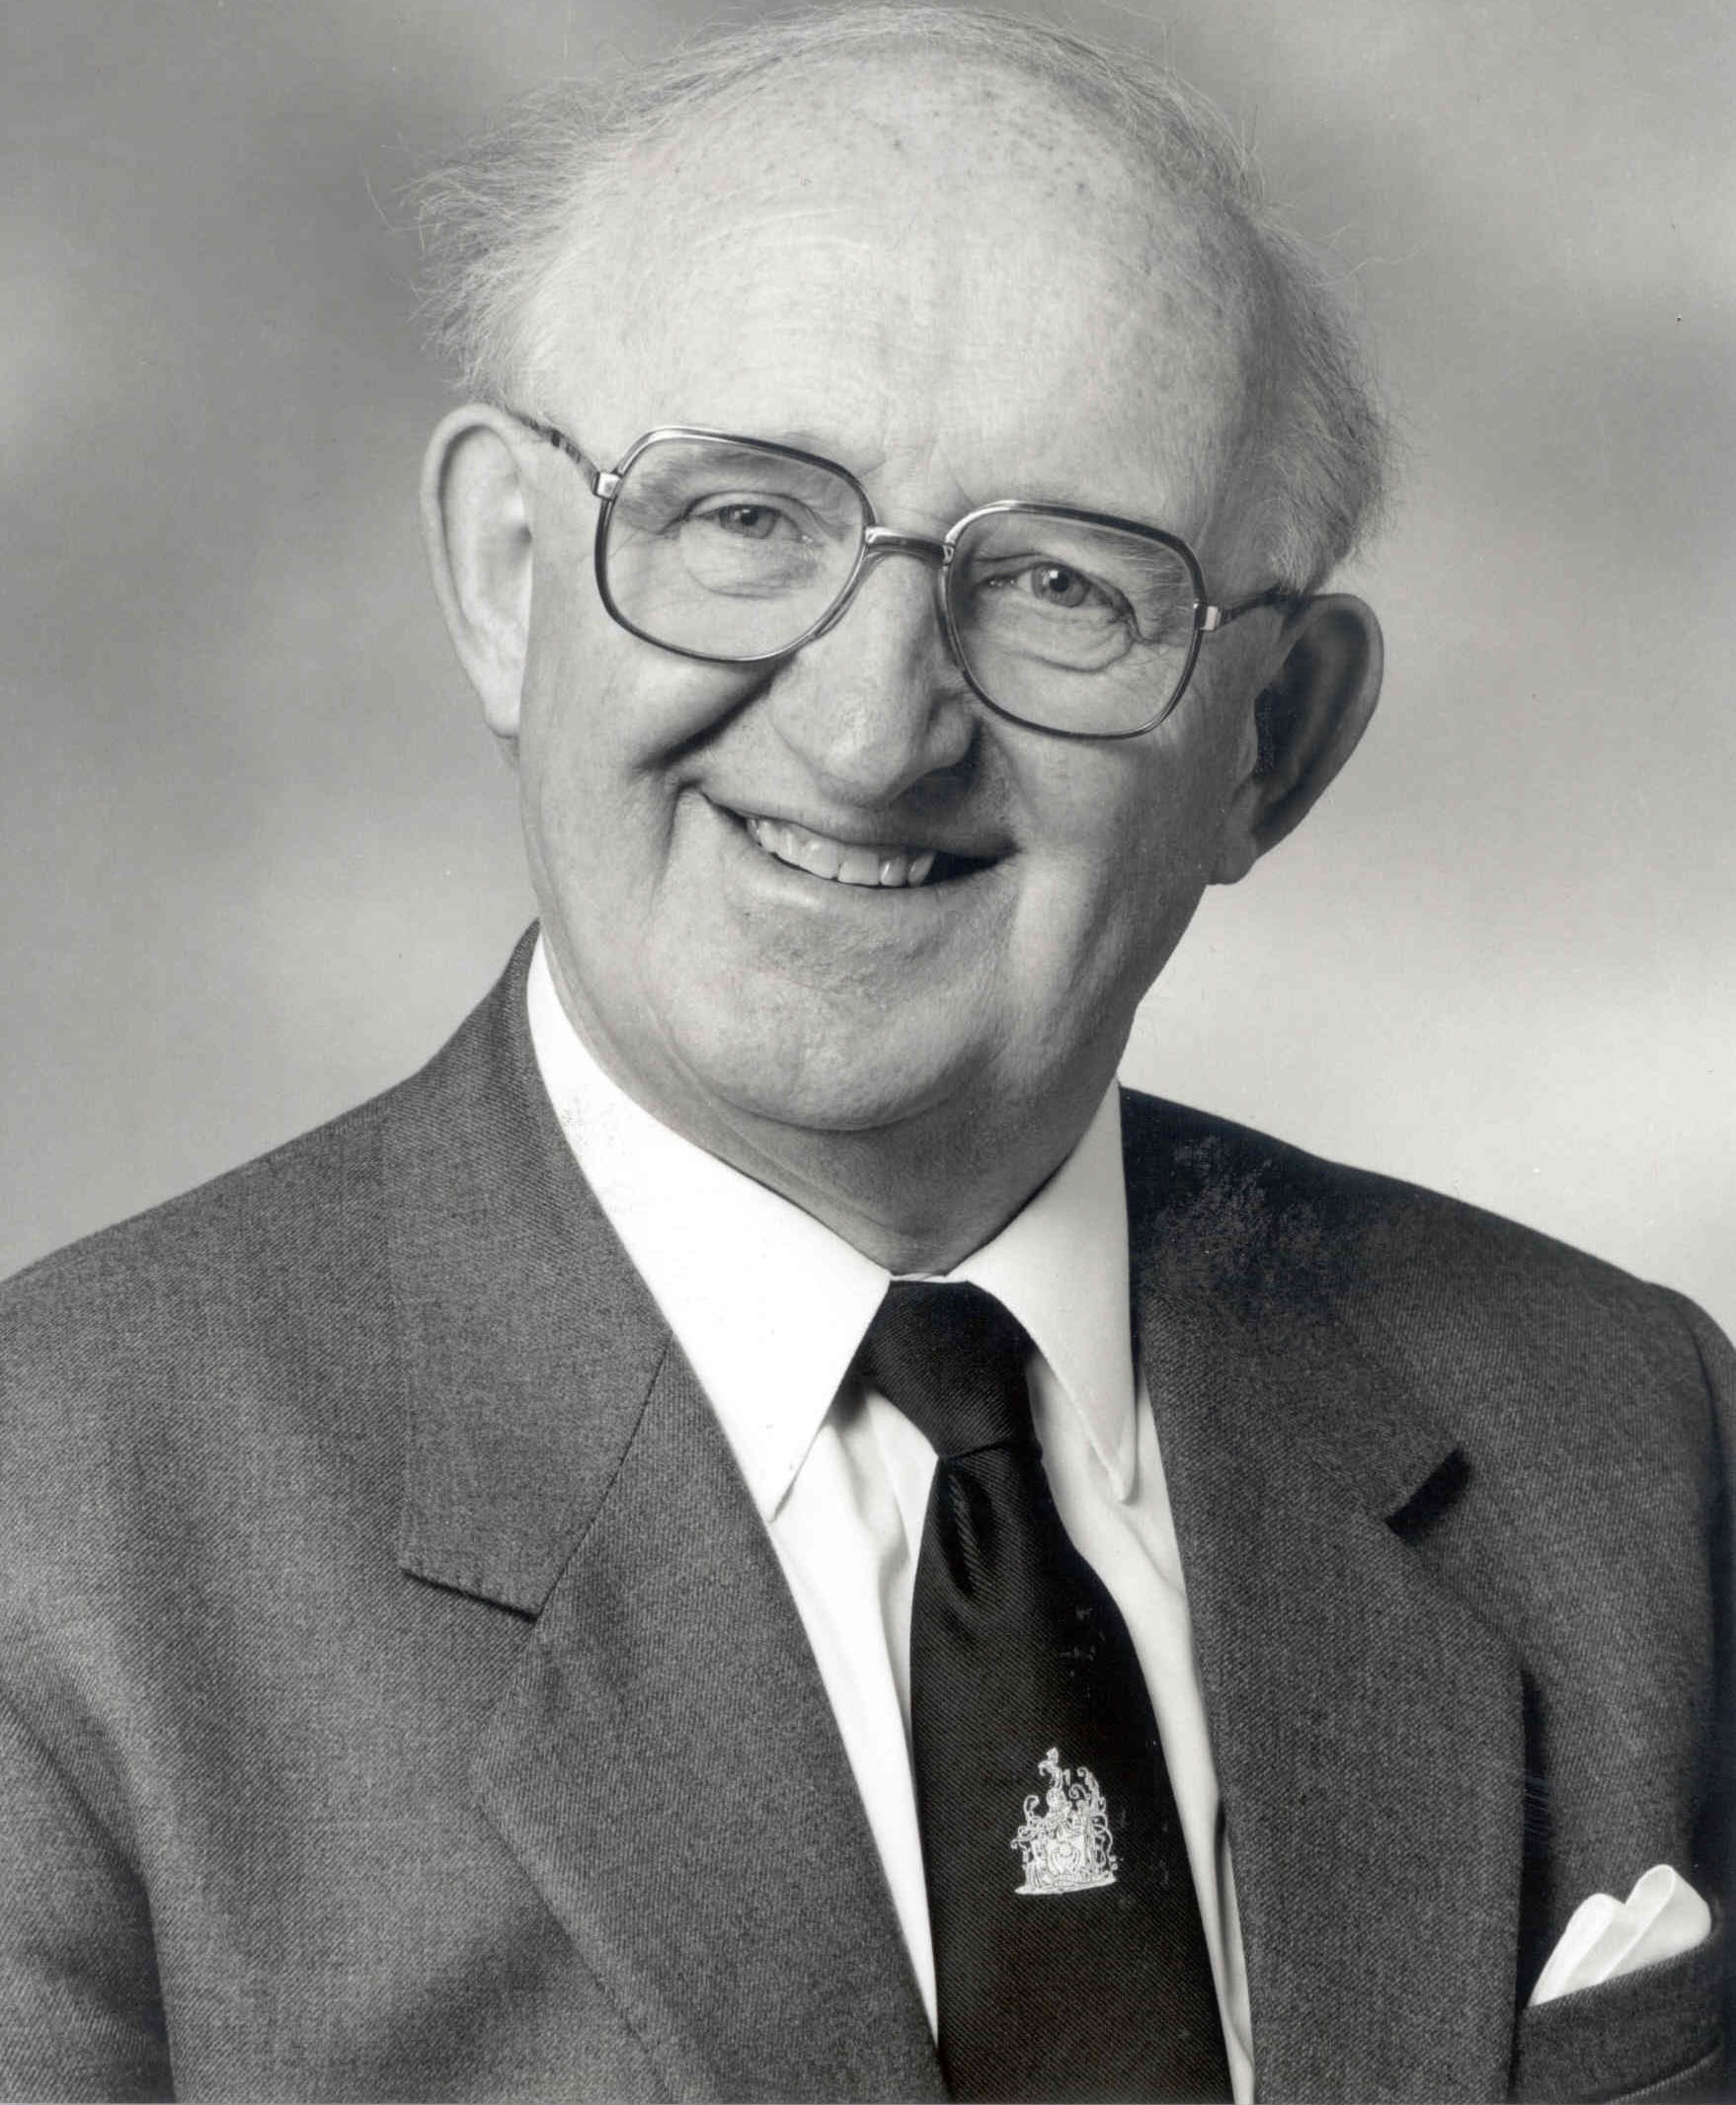 Emeritus Professor Duncan Dowson CBE FRS FREng obituary. January 2020